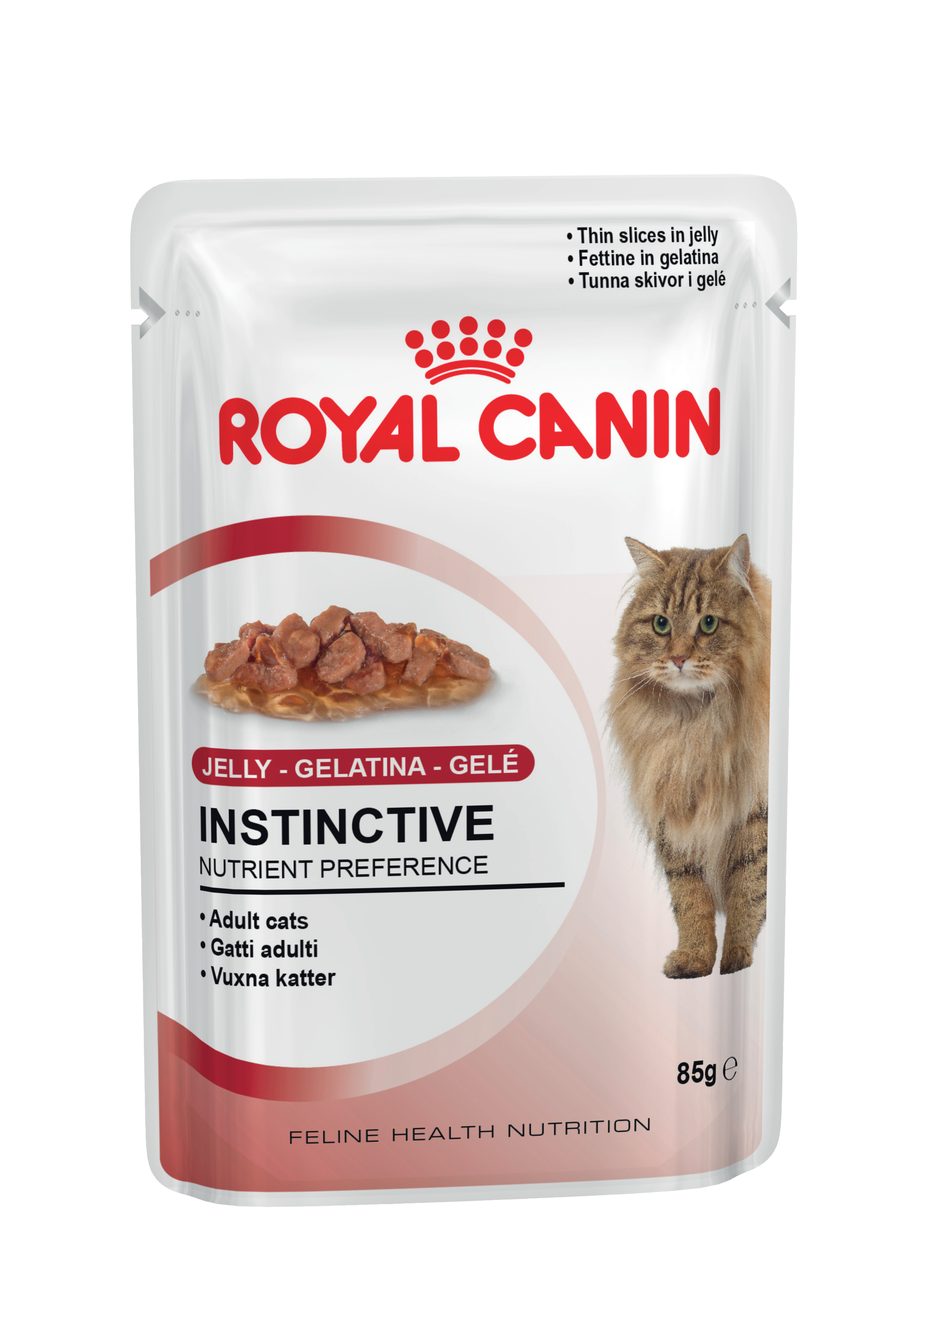 royal canin cat instinctive